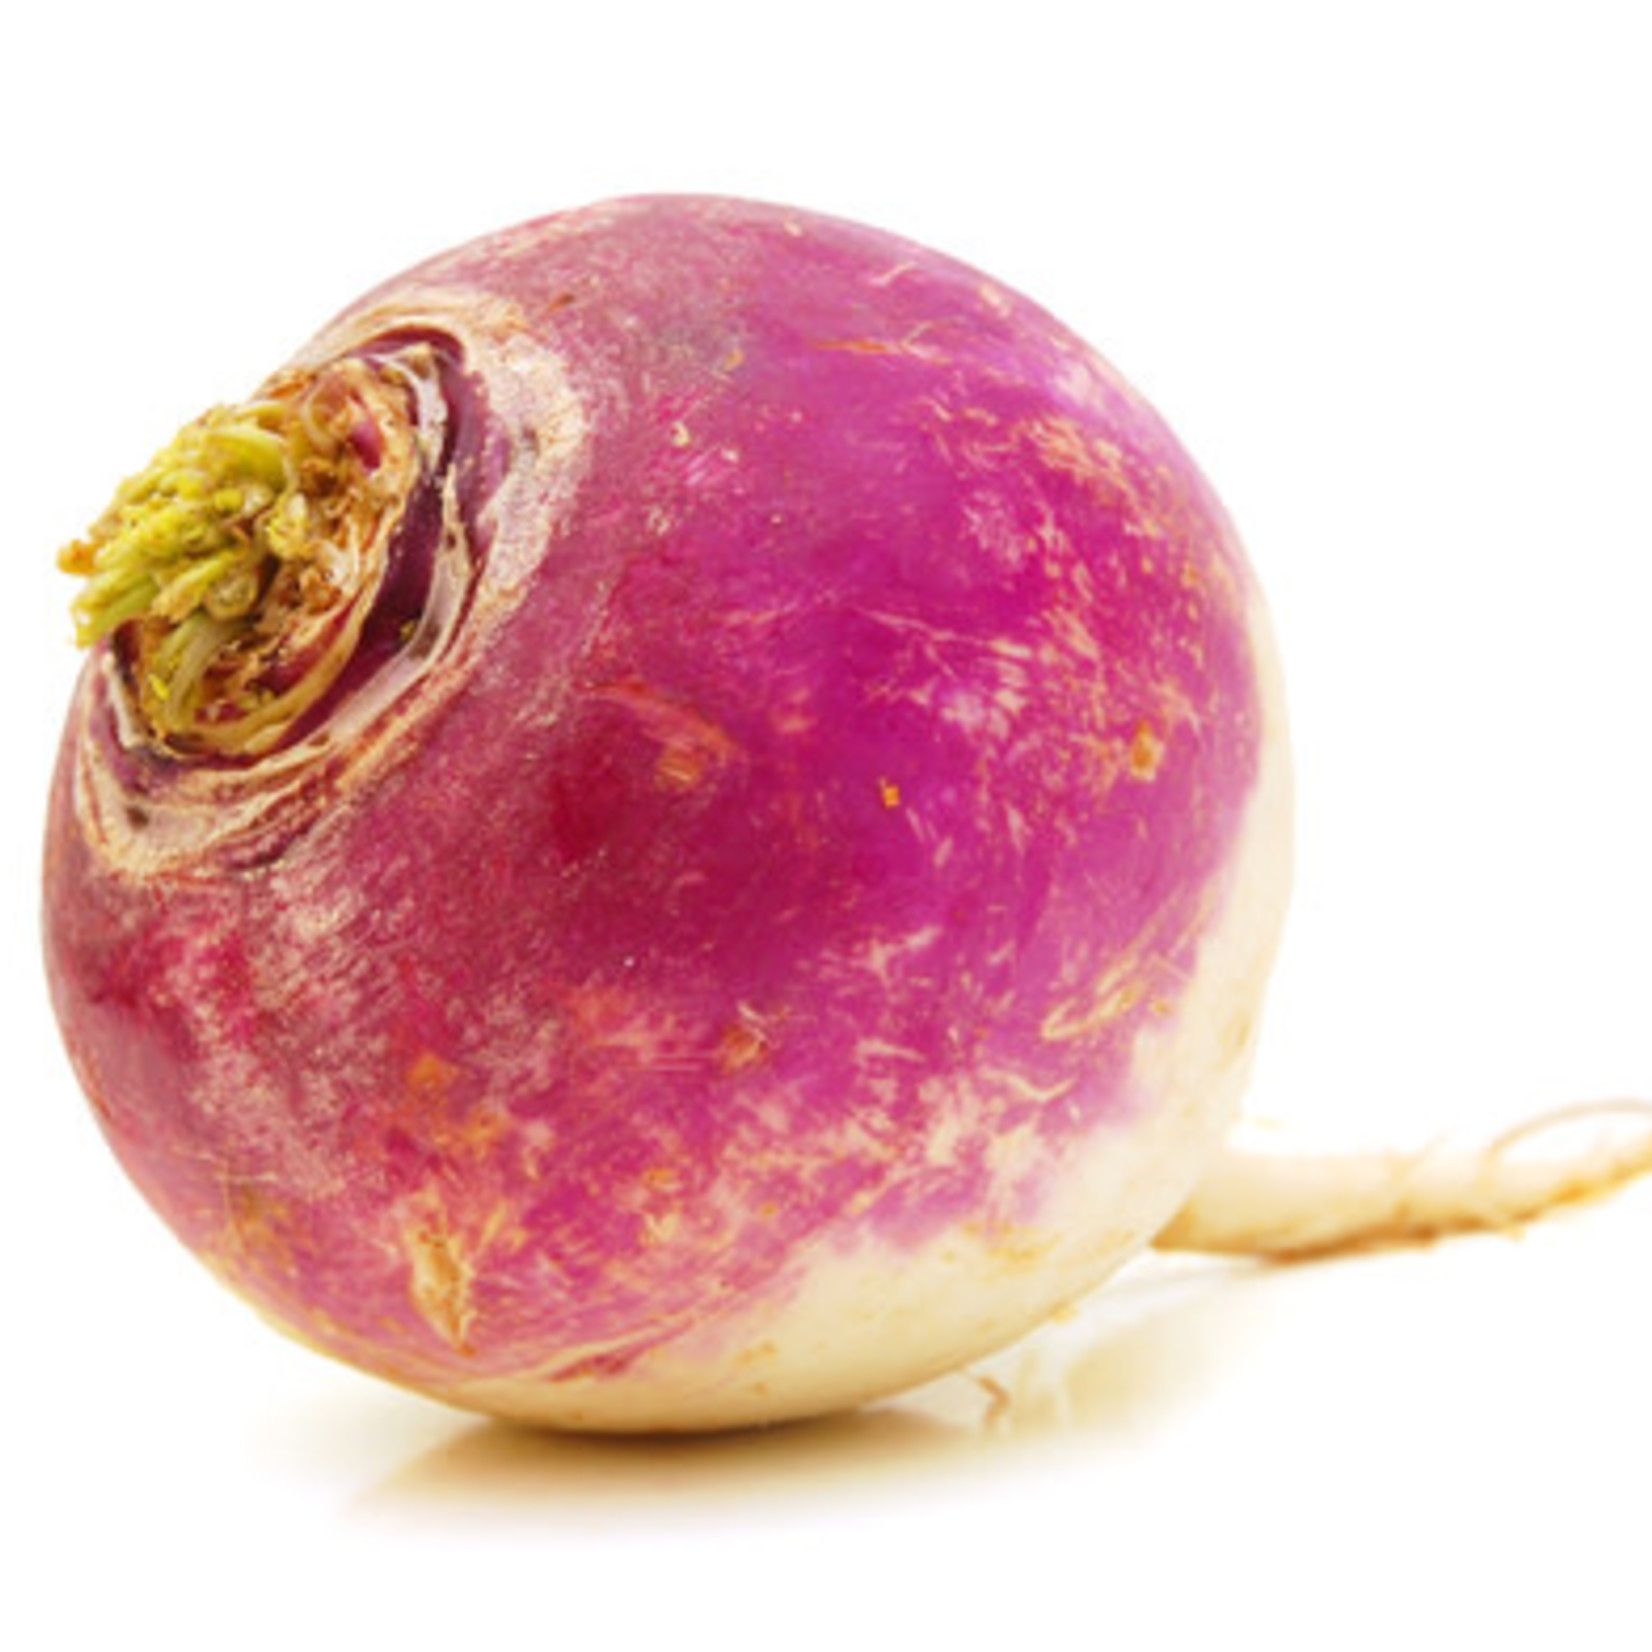 Summer Turnip (seed pkg) - Purple Top W. Globe